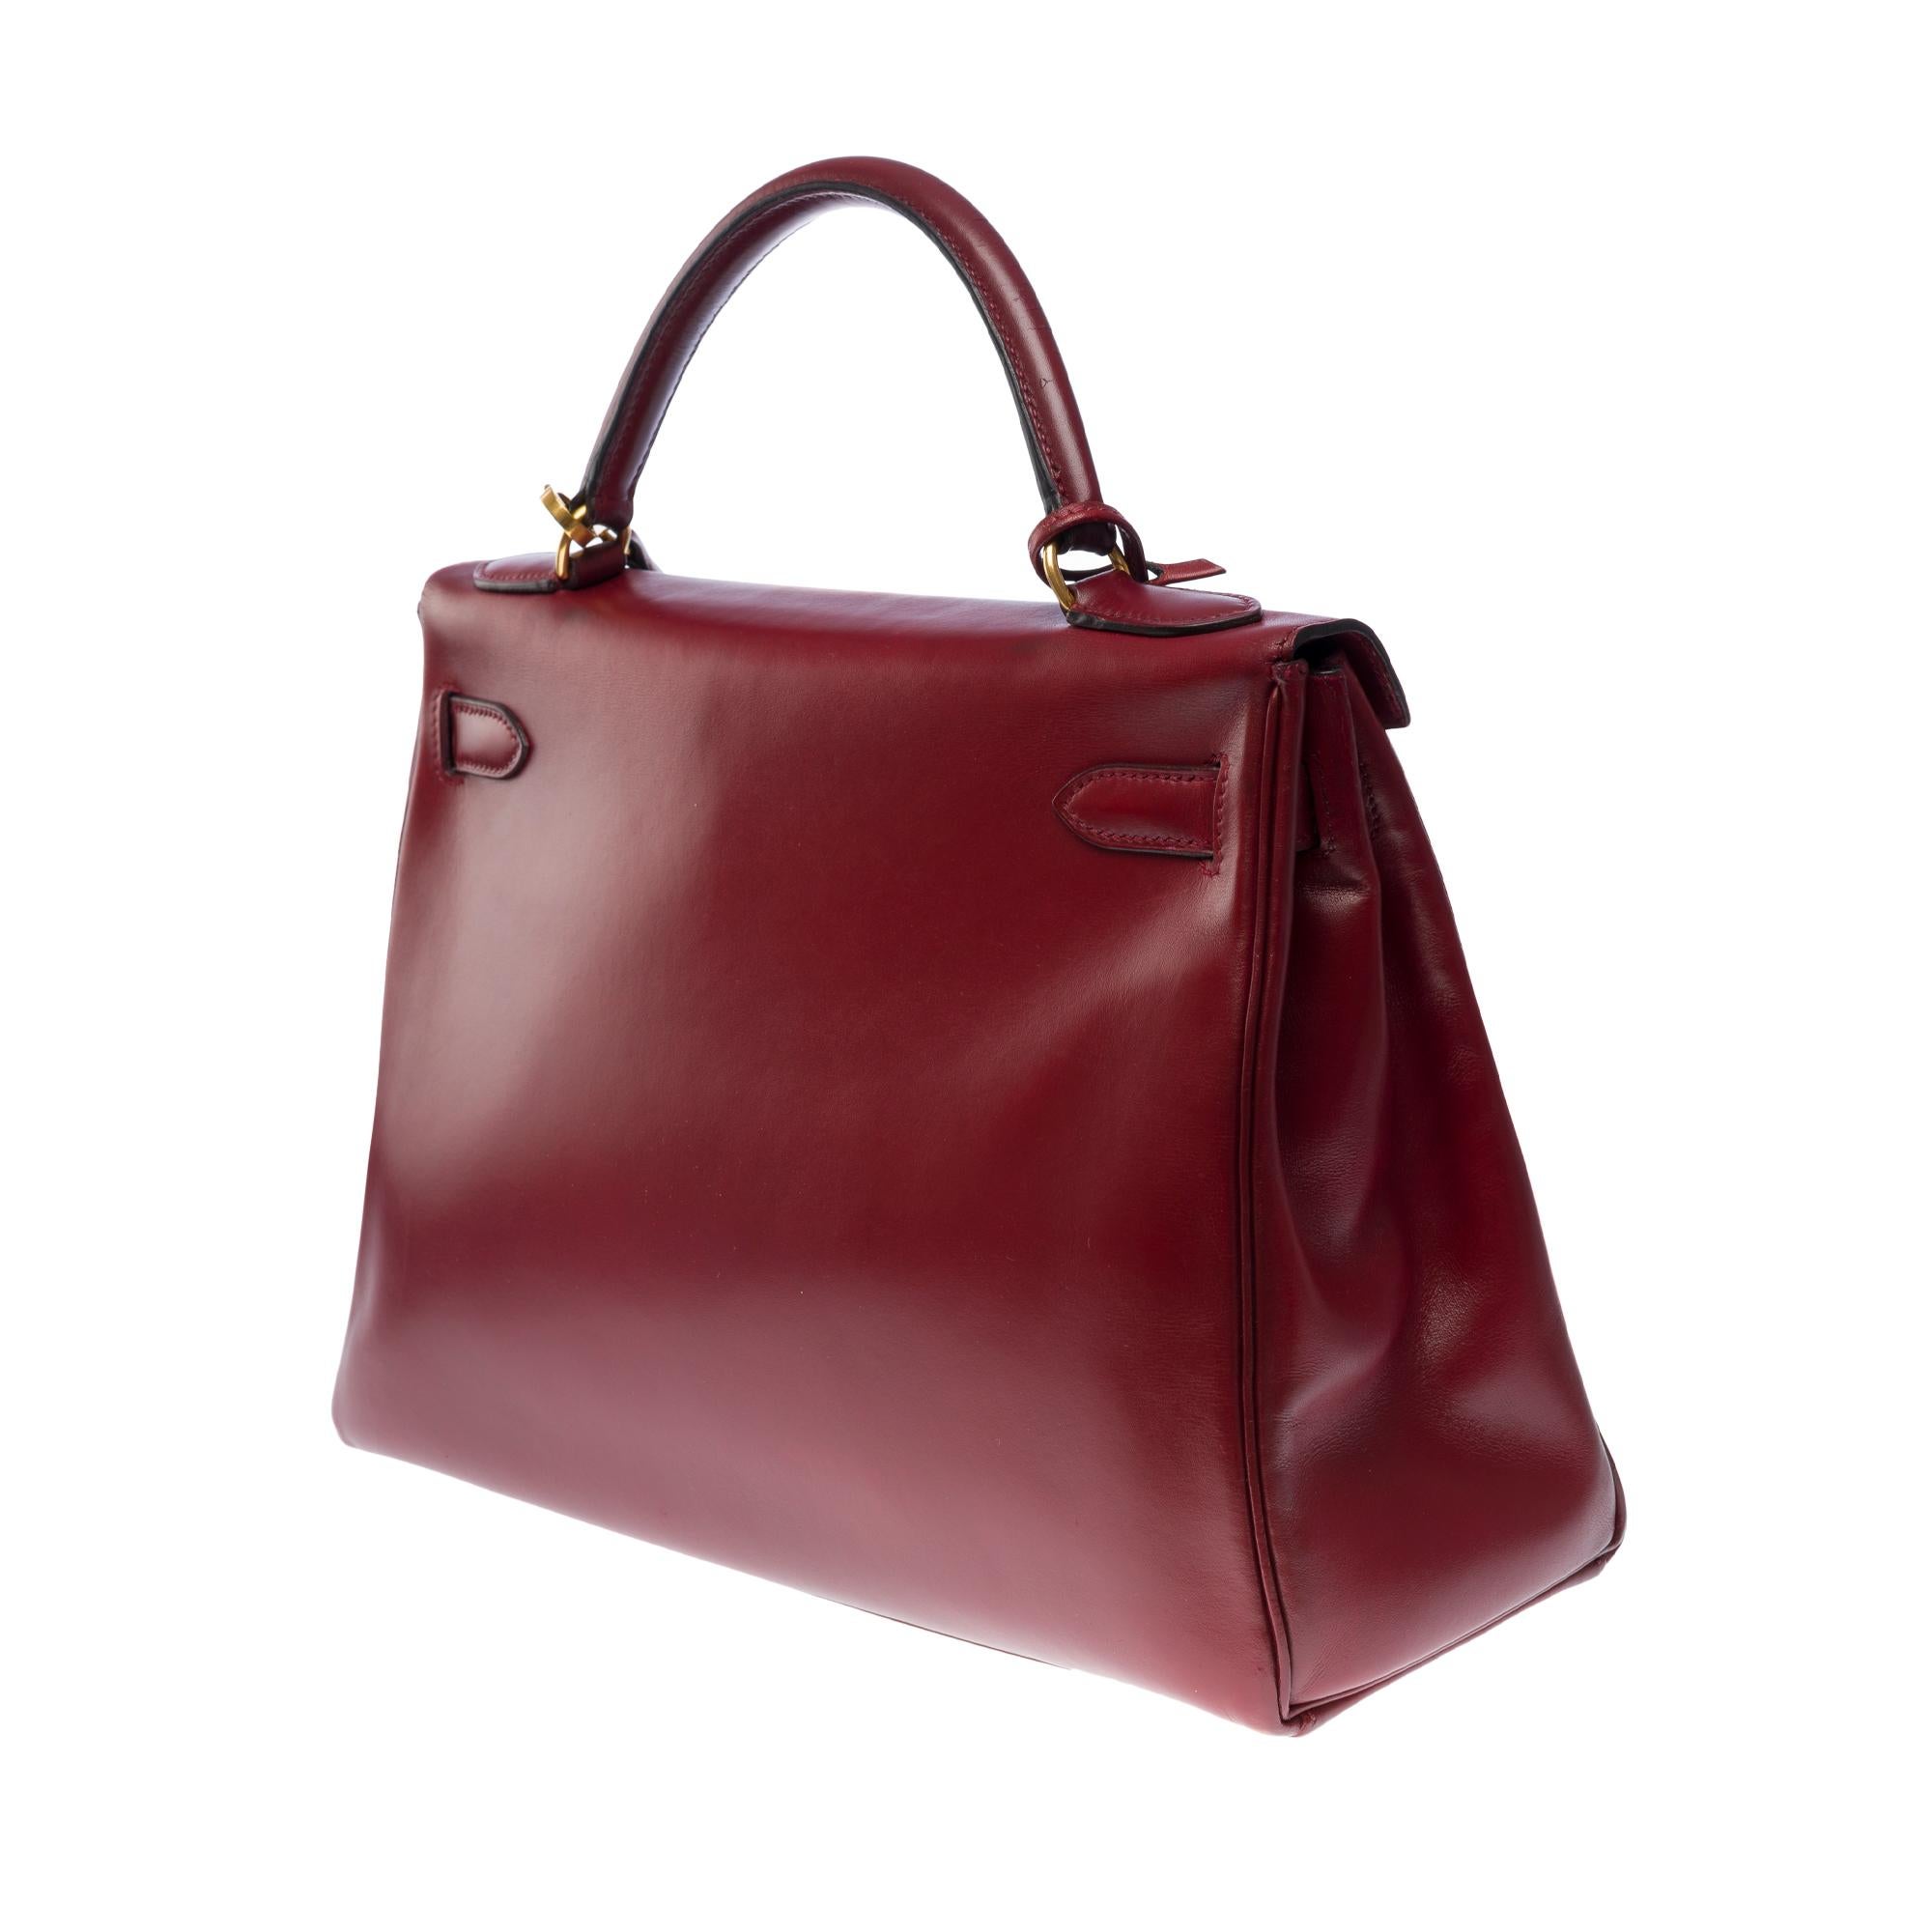 Hermès Kelly 32 retourne handbag strap in Burgundy box calfskin leather, GHW 1